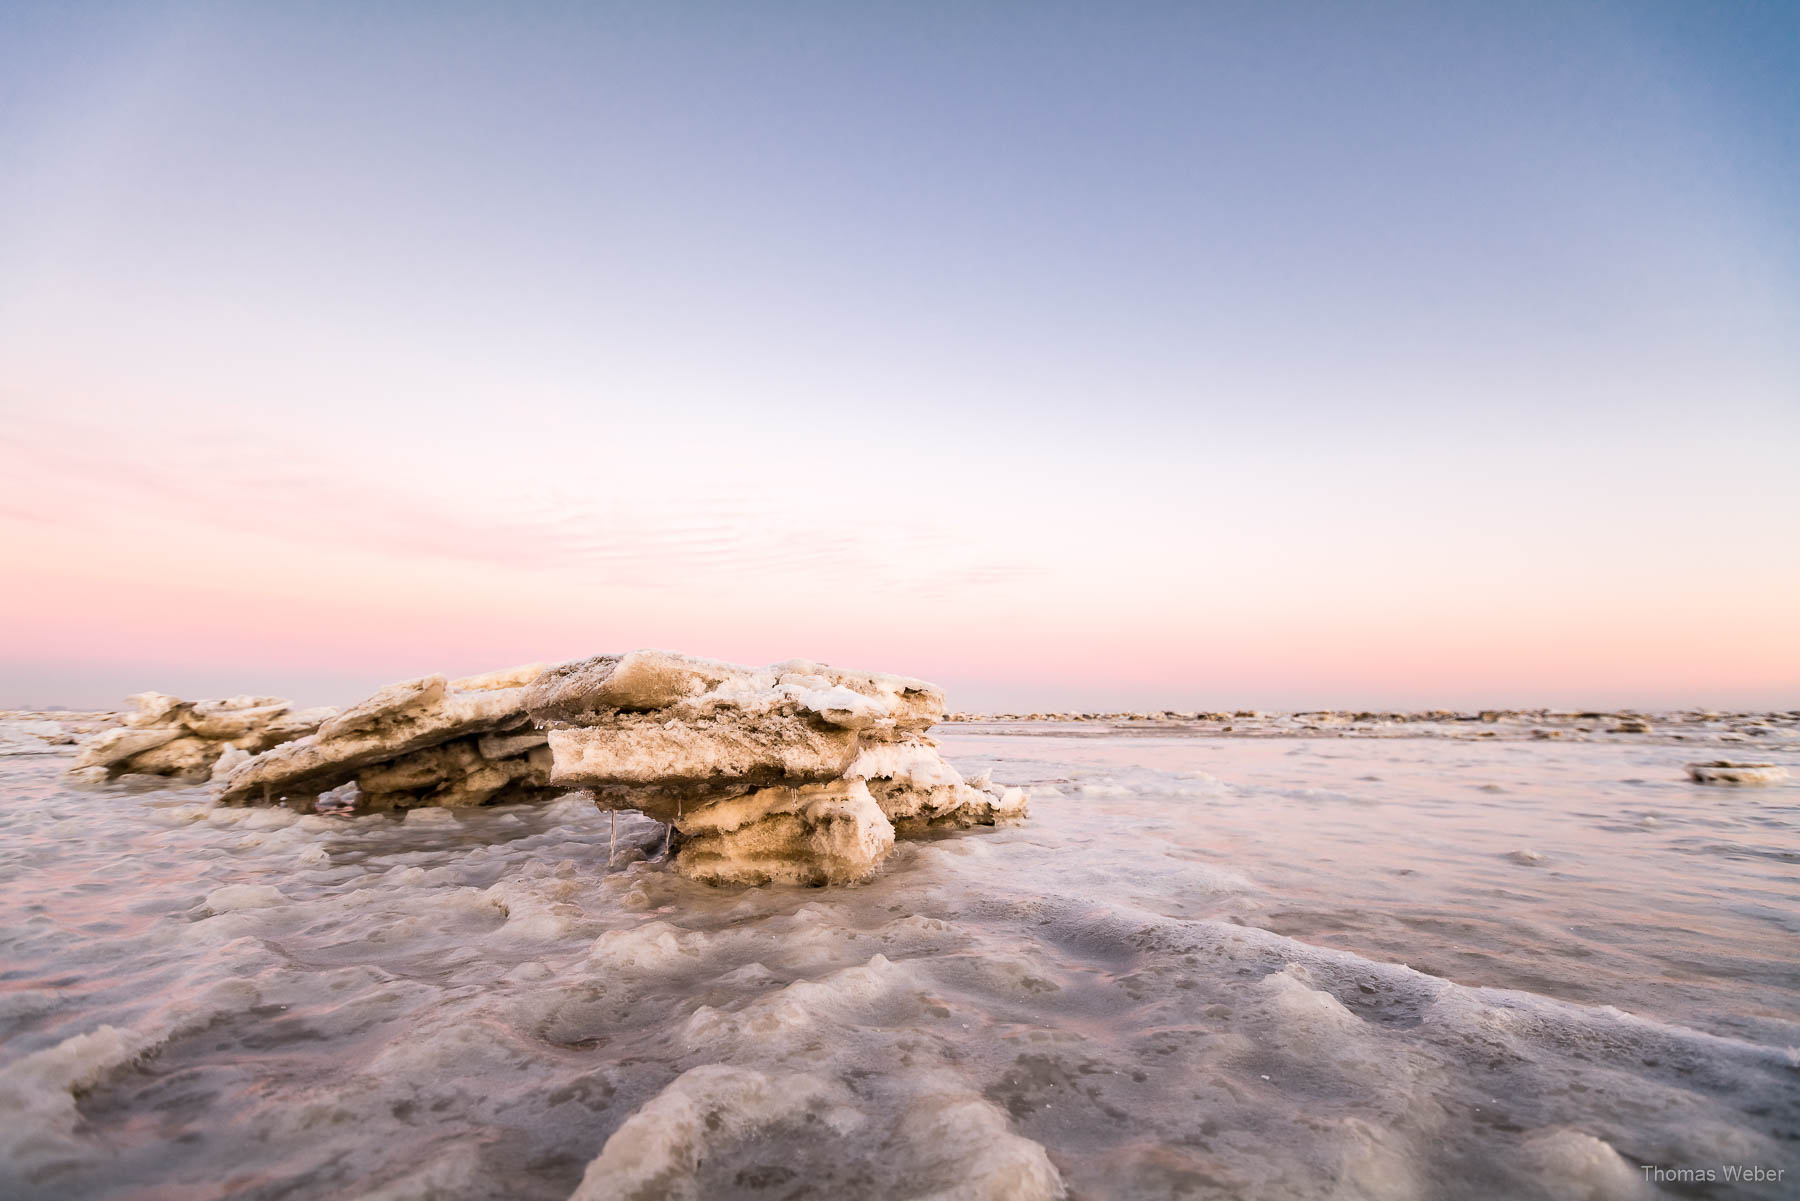 Eingefrorene Nordsee in Dangast (Varel) am Jadebusen, Fotograf Thomas Weber aus Oldenburg